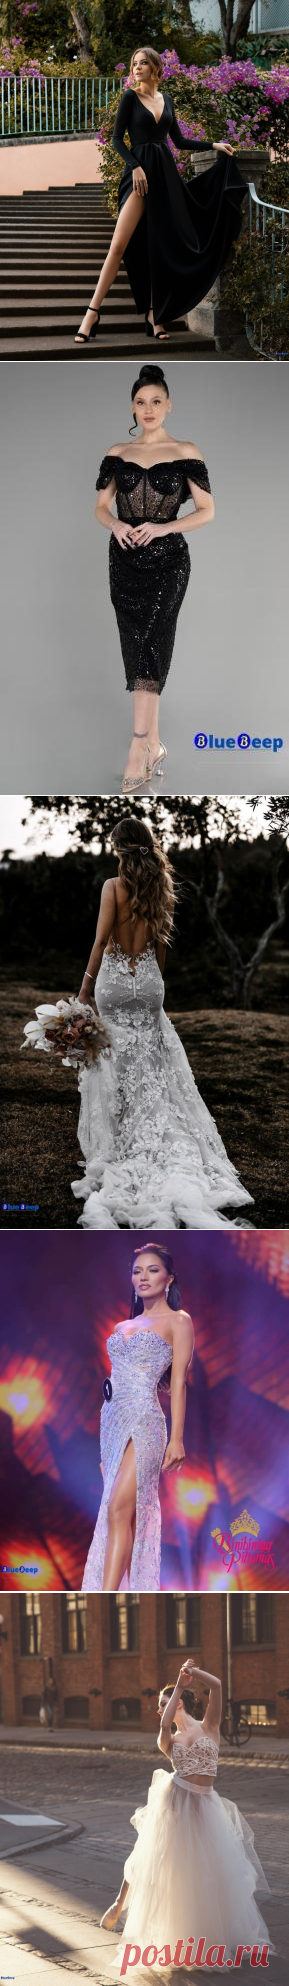 Explore the Best Wedding Dress Websites: Find Your Dream Gown Online